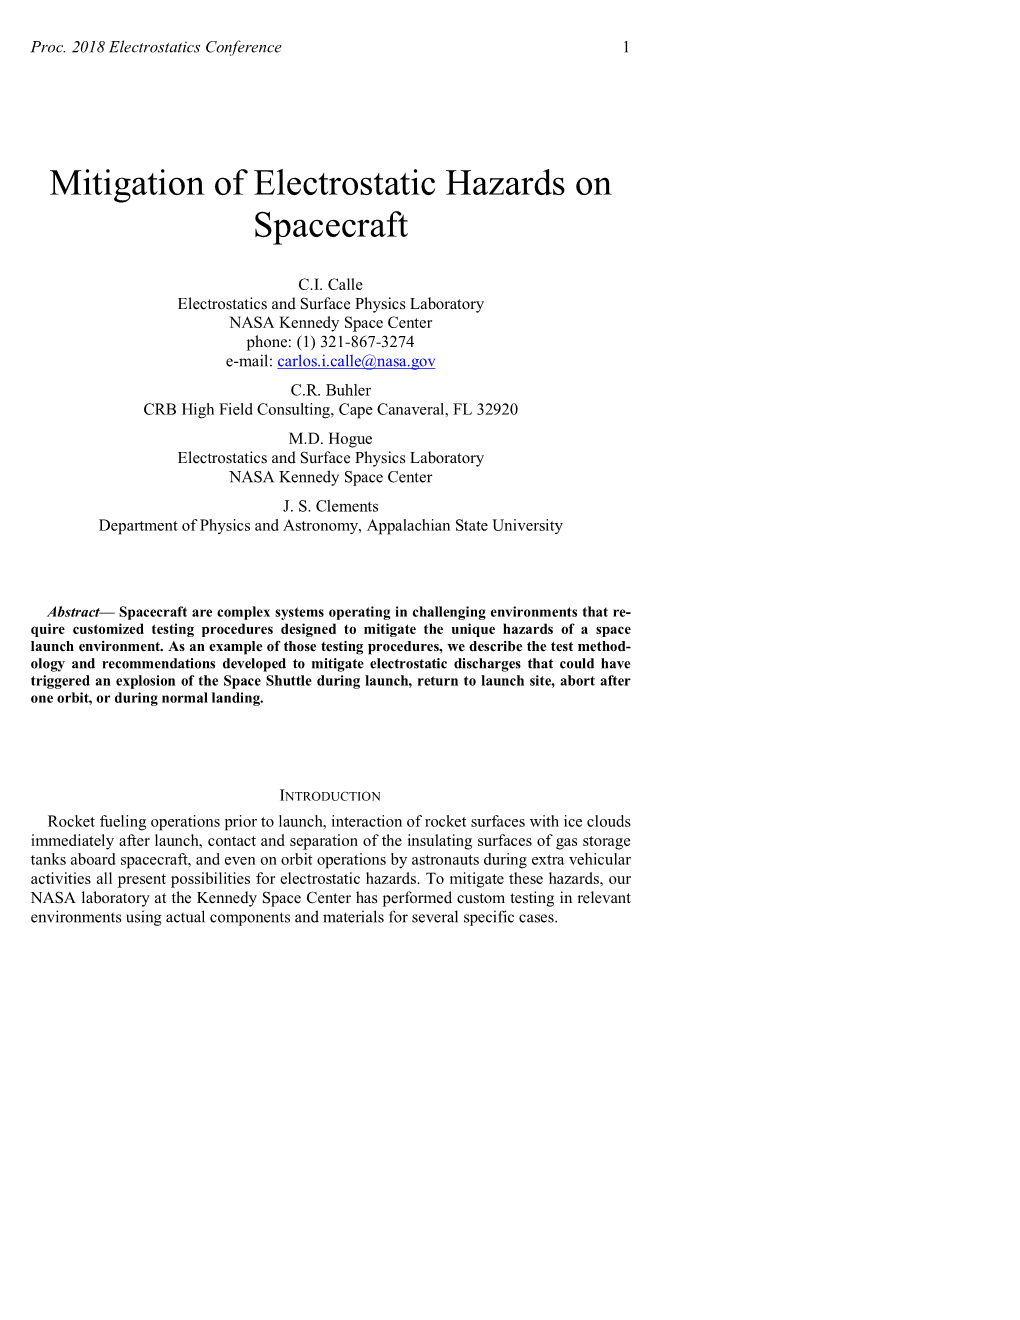 Mitigation of Electrostatic Hazards in Spacecraft